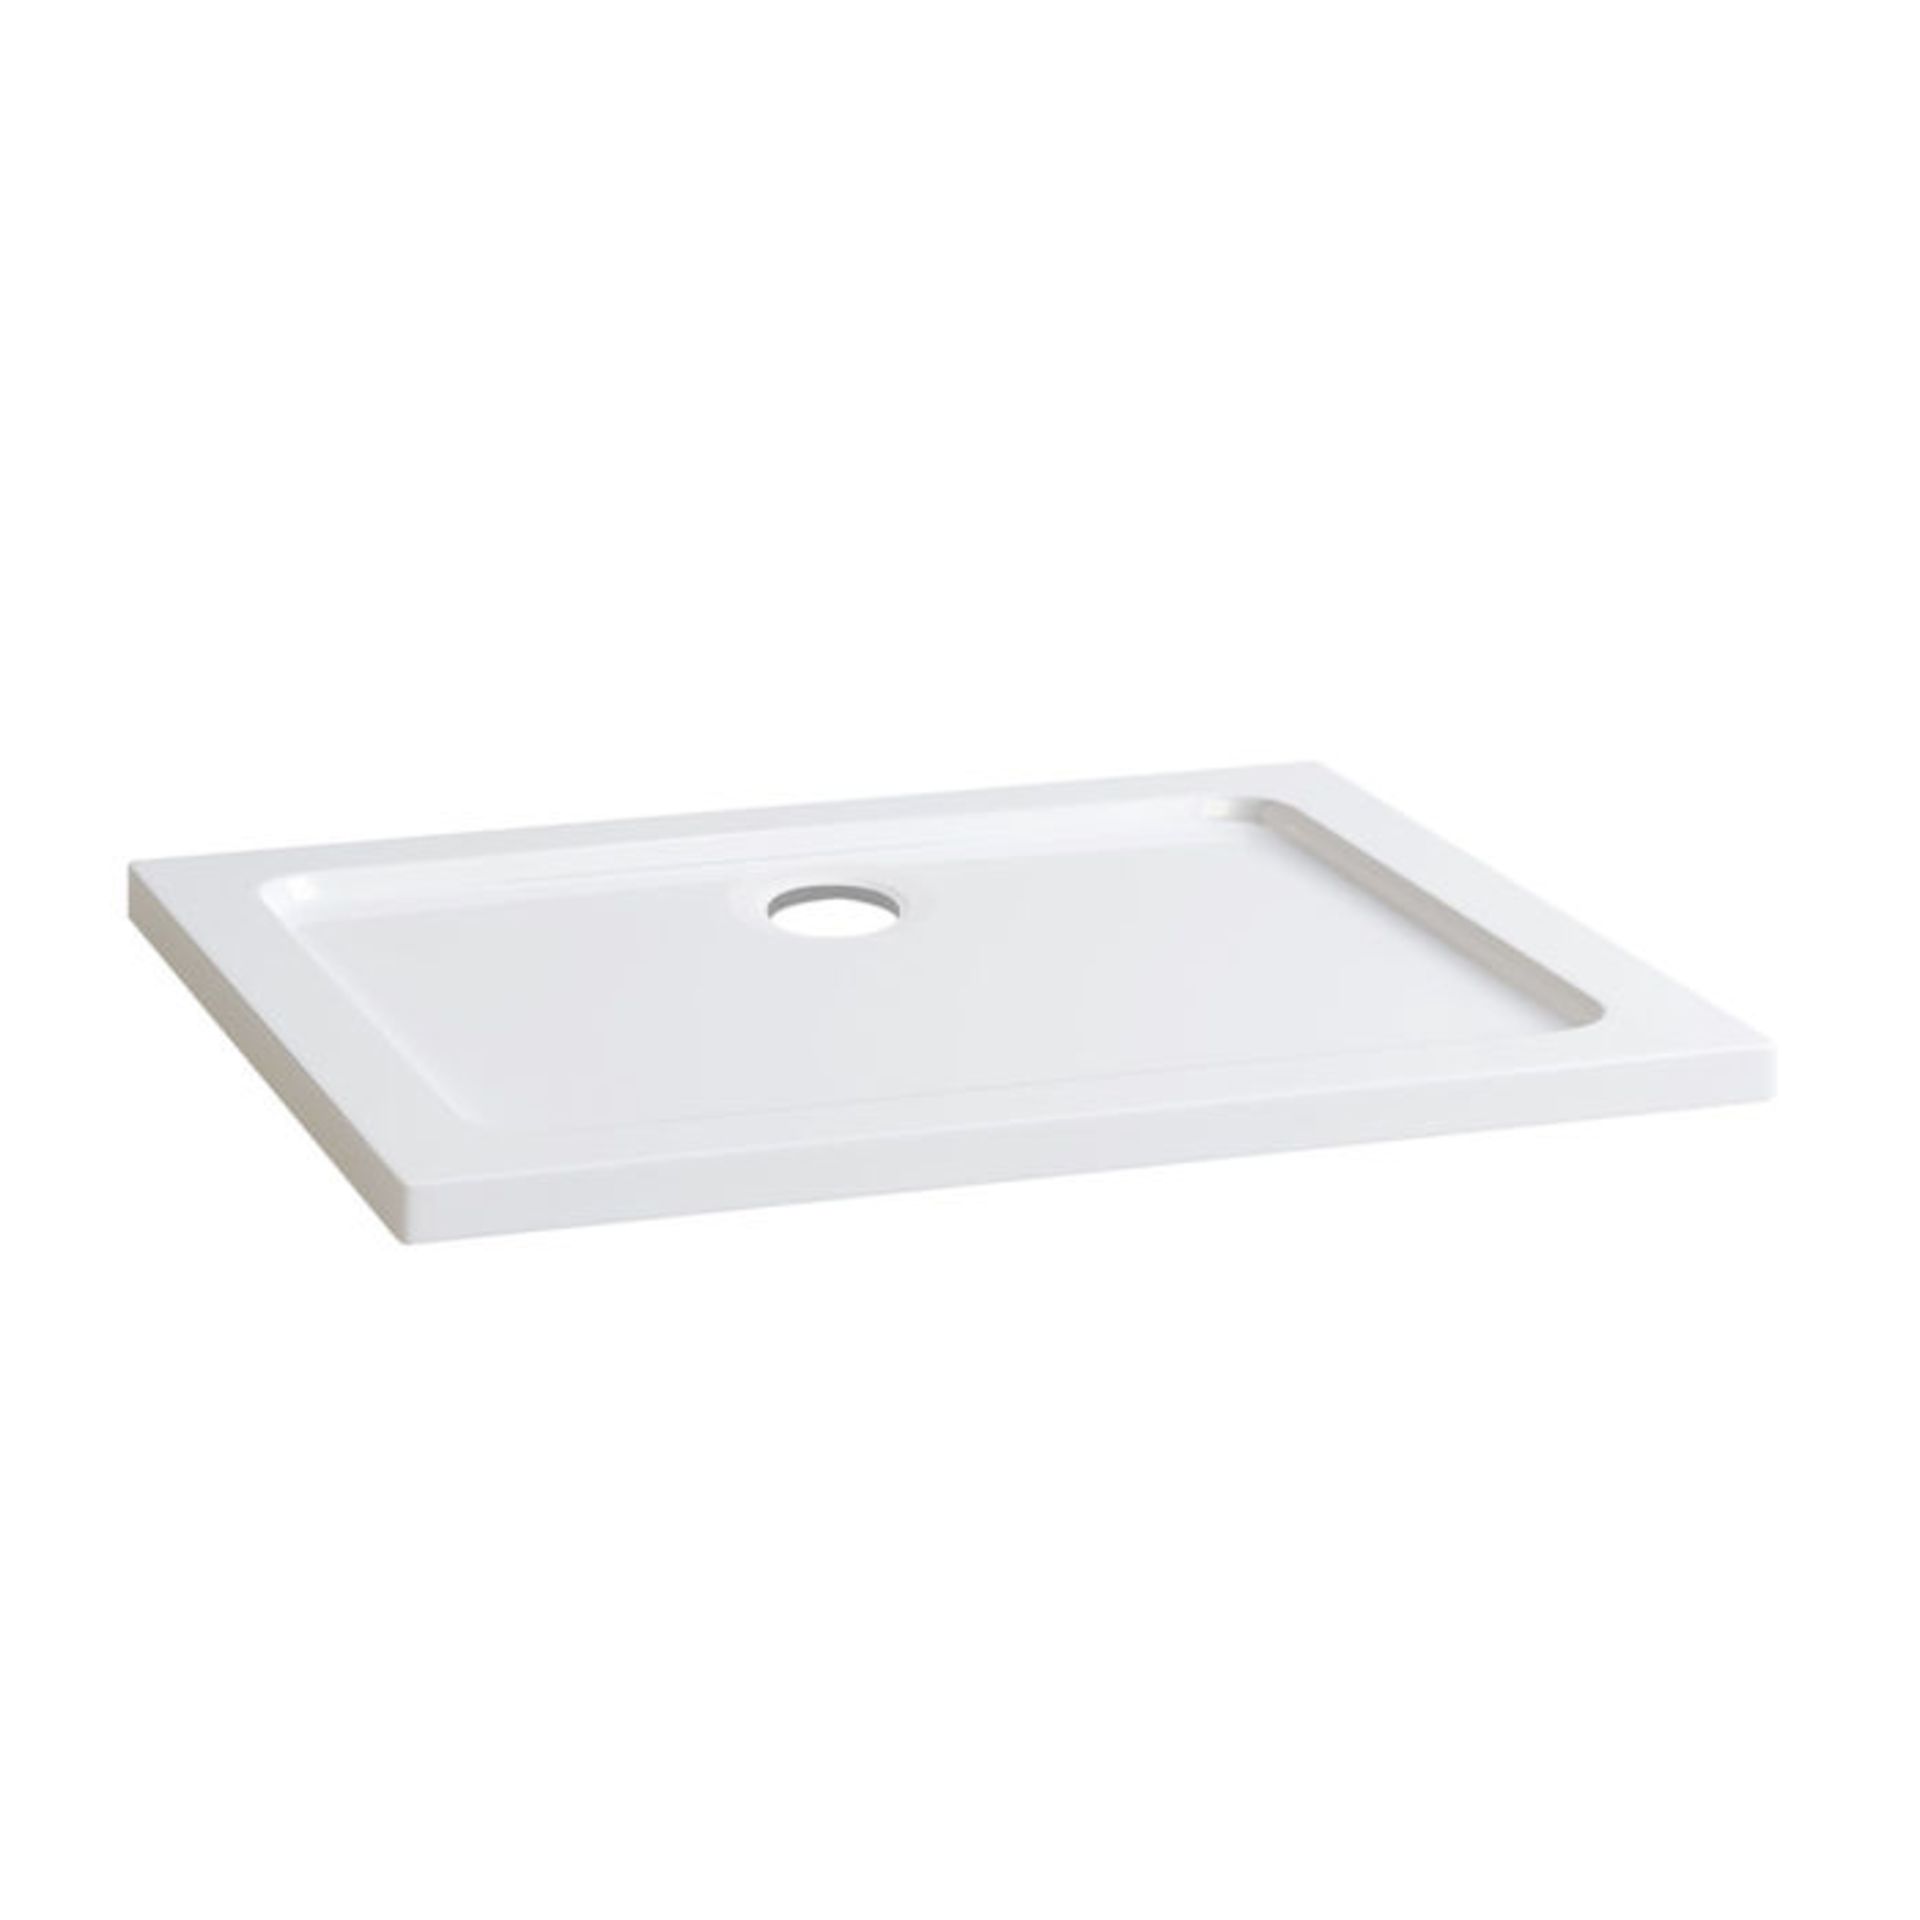 (NY148) 900x760mm Rectangular Ultra Slim Stone Shower Tray. Low profile ultra slim design Gel coated - Image 2 of 2